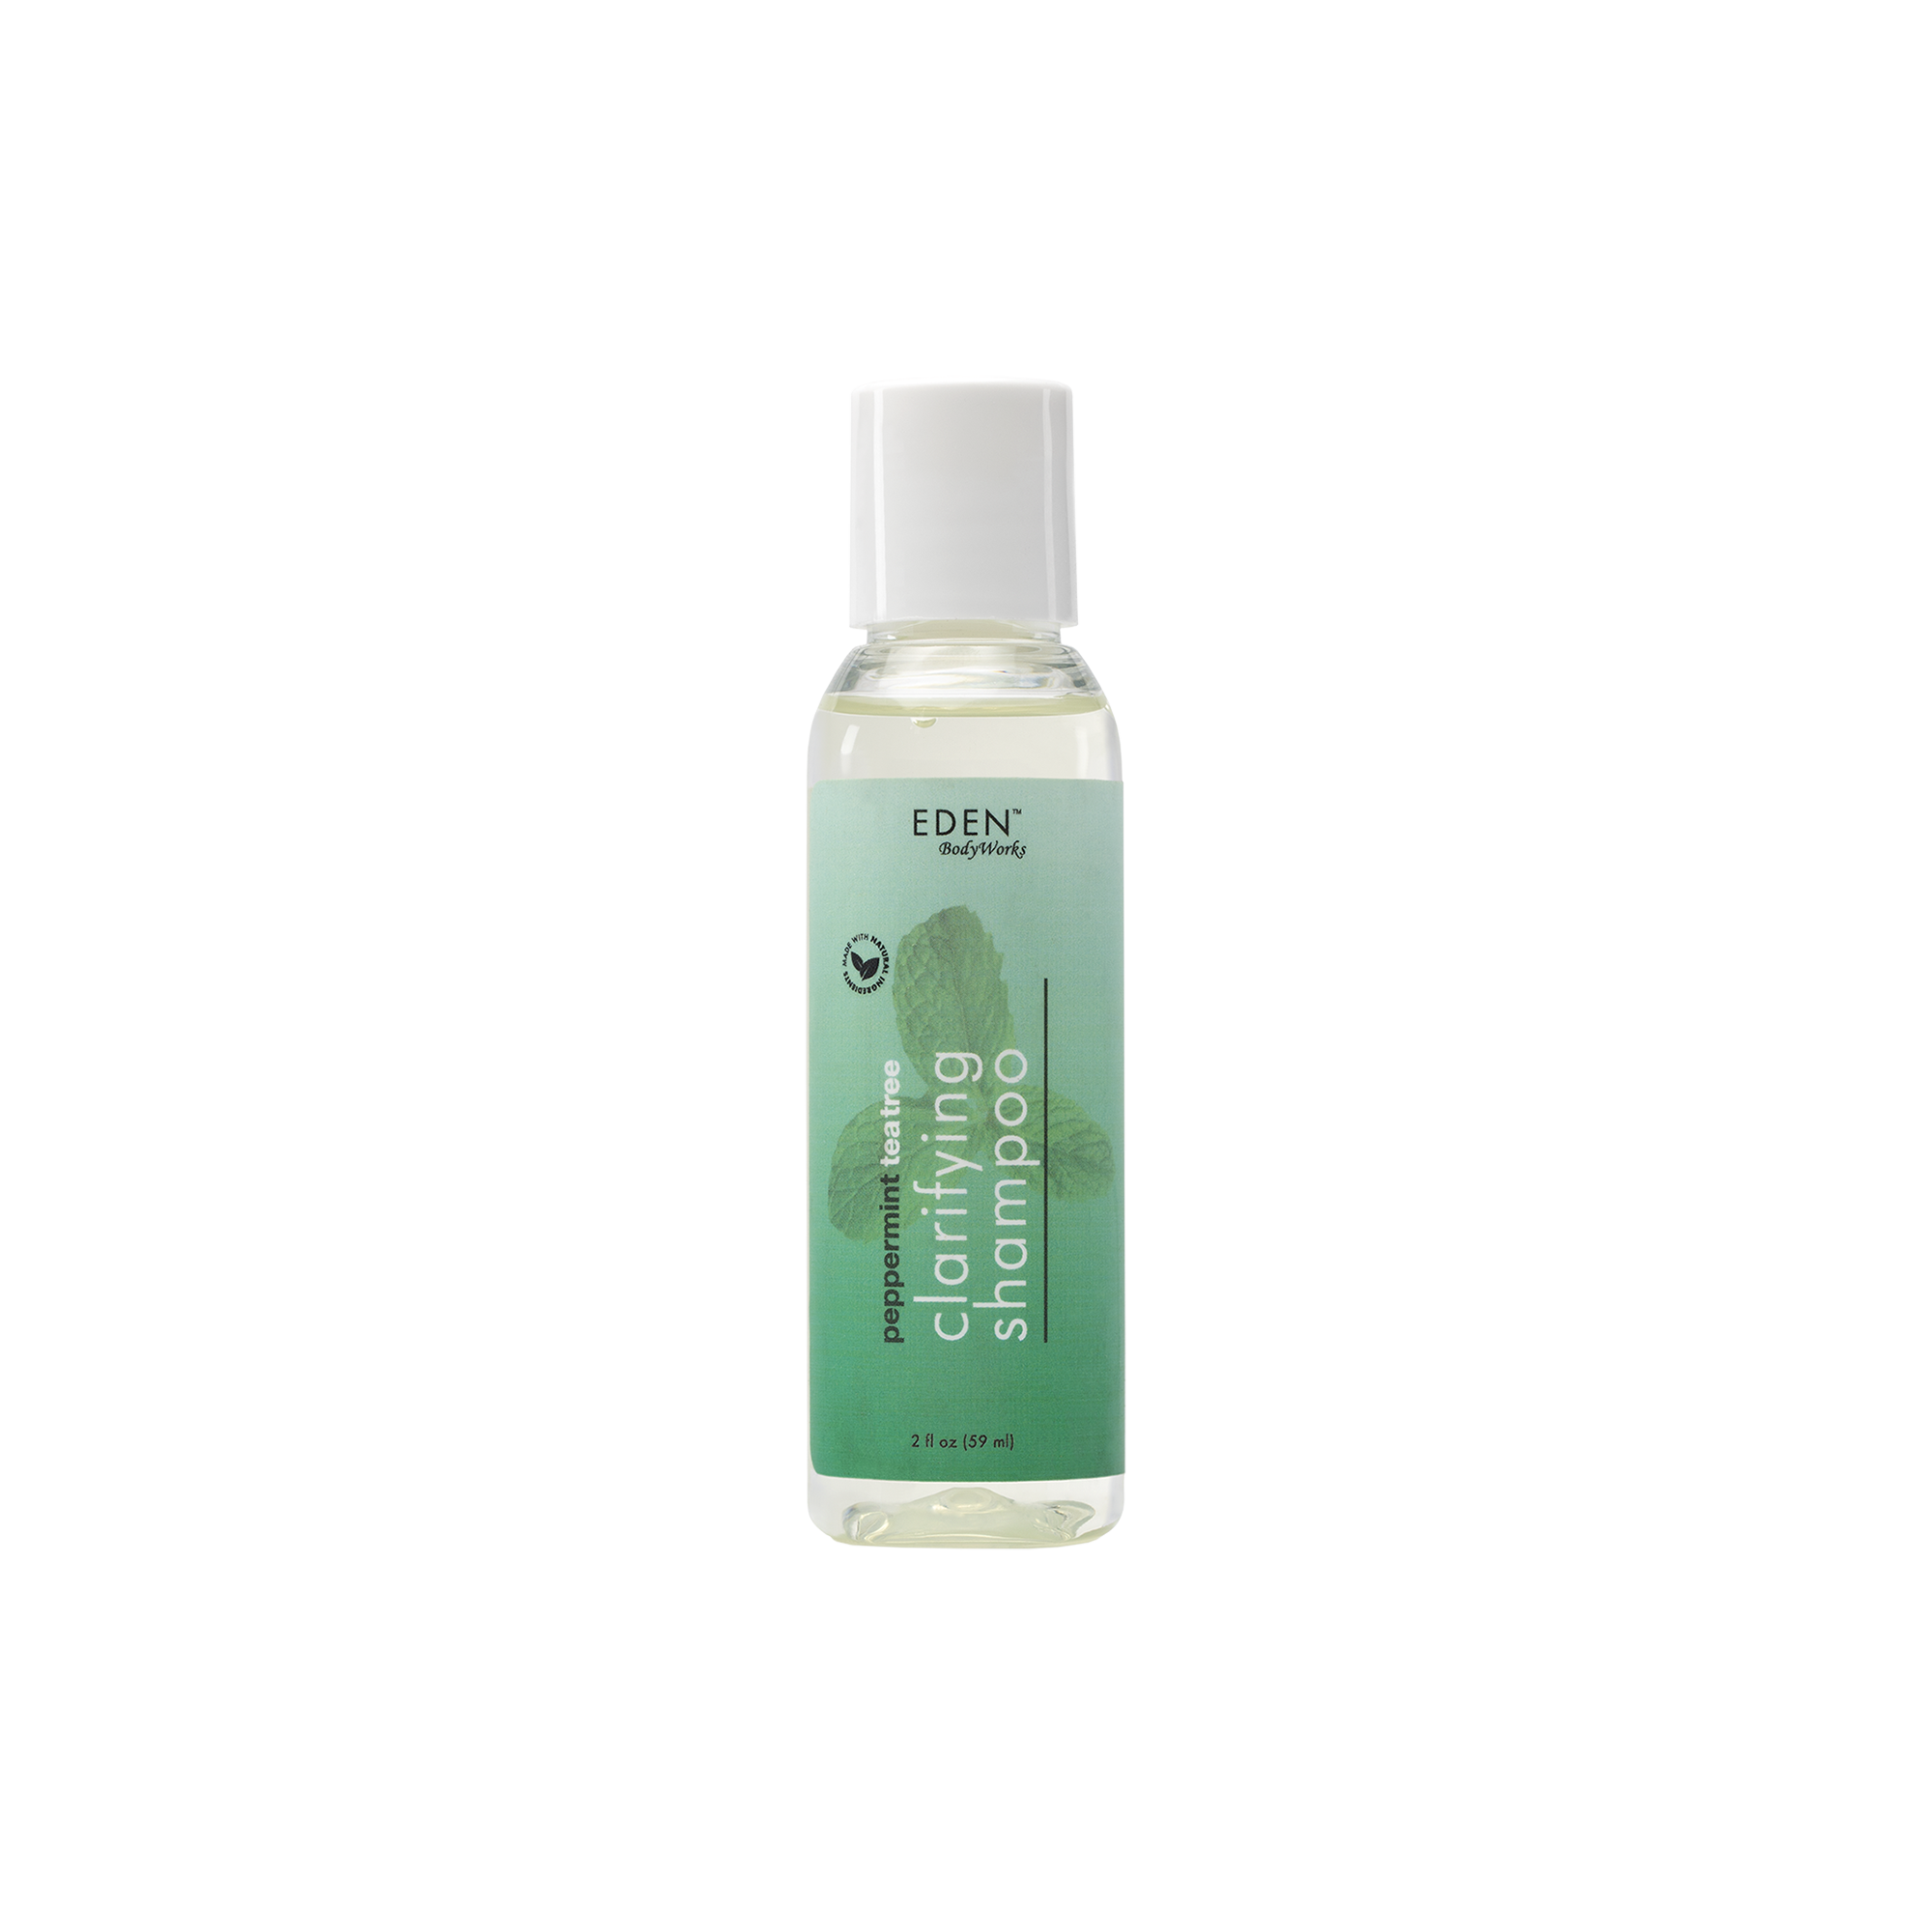 Foragt Arrowhead Uden tvivl Peppermint Tea Tree Clarifying Shampoo – EDEN BodyWorks